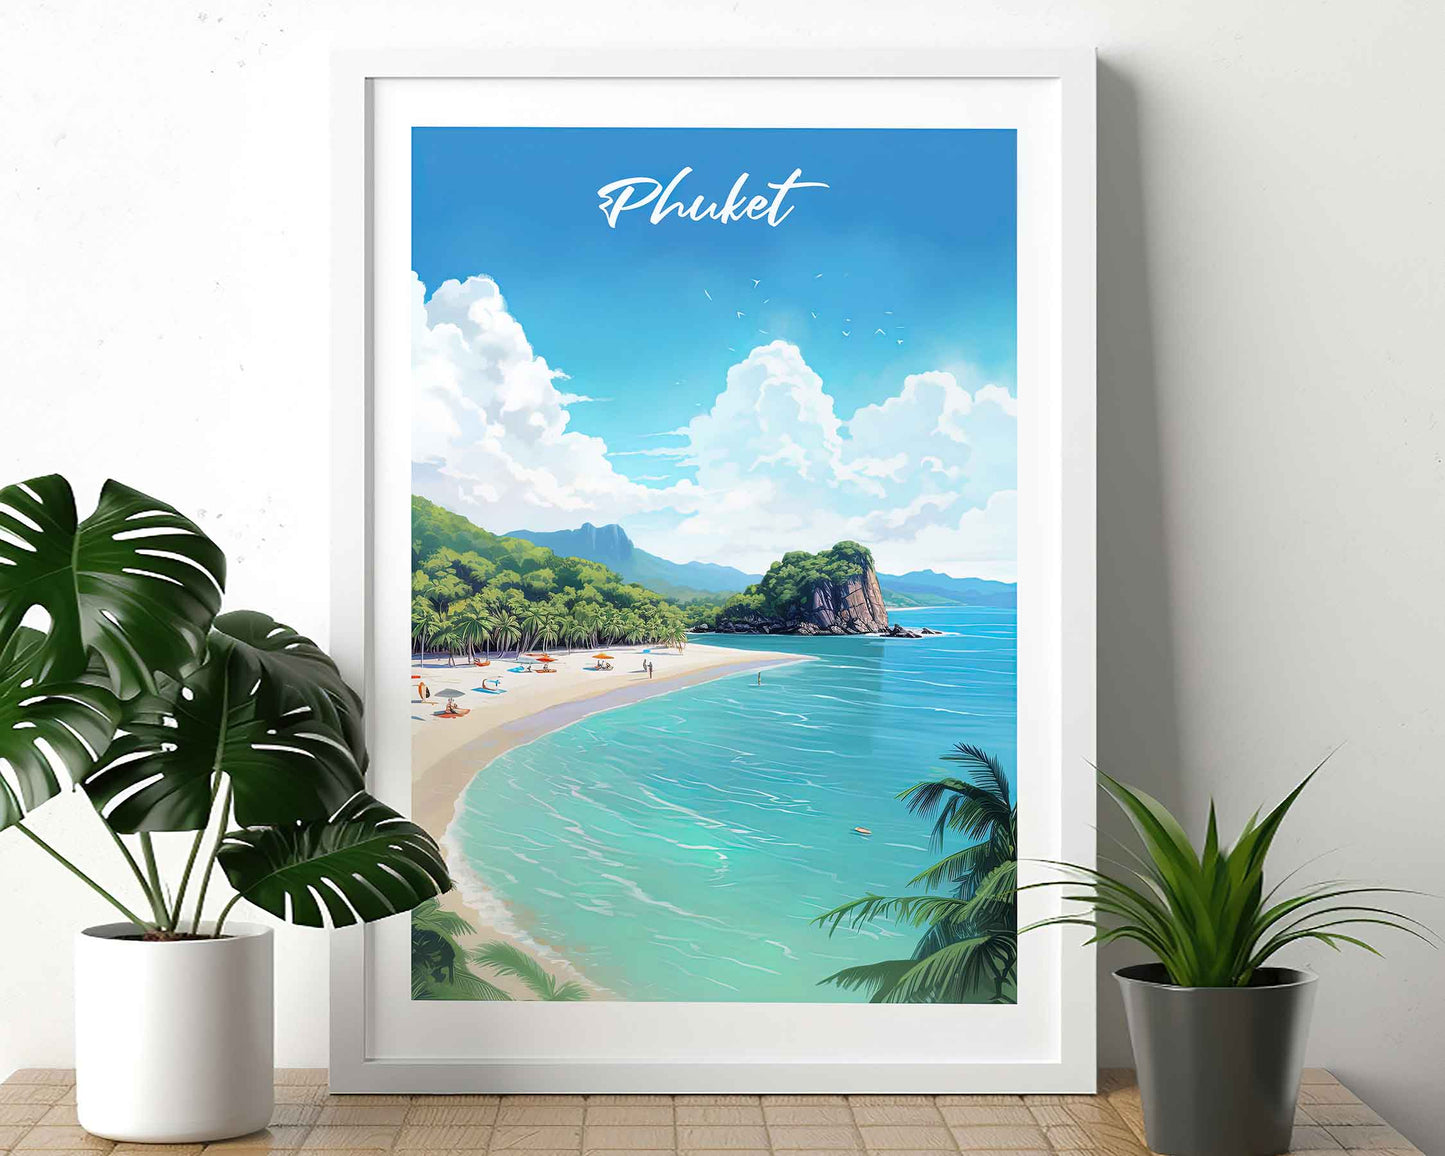 Framed Image of Phuket Thailand Travel Poster Prints Illustration Wall Art